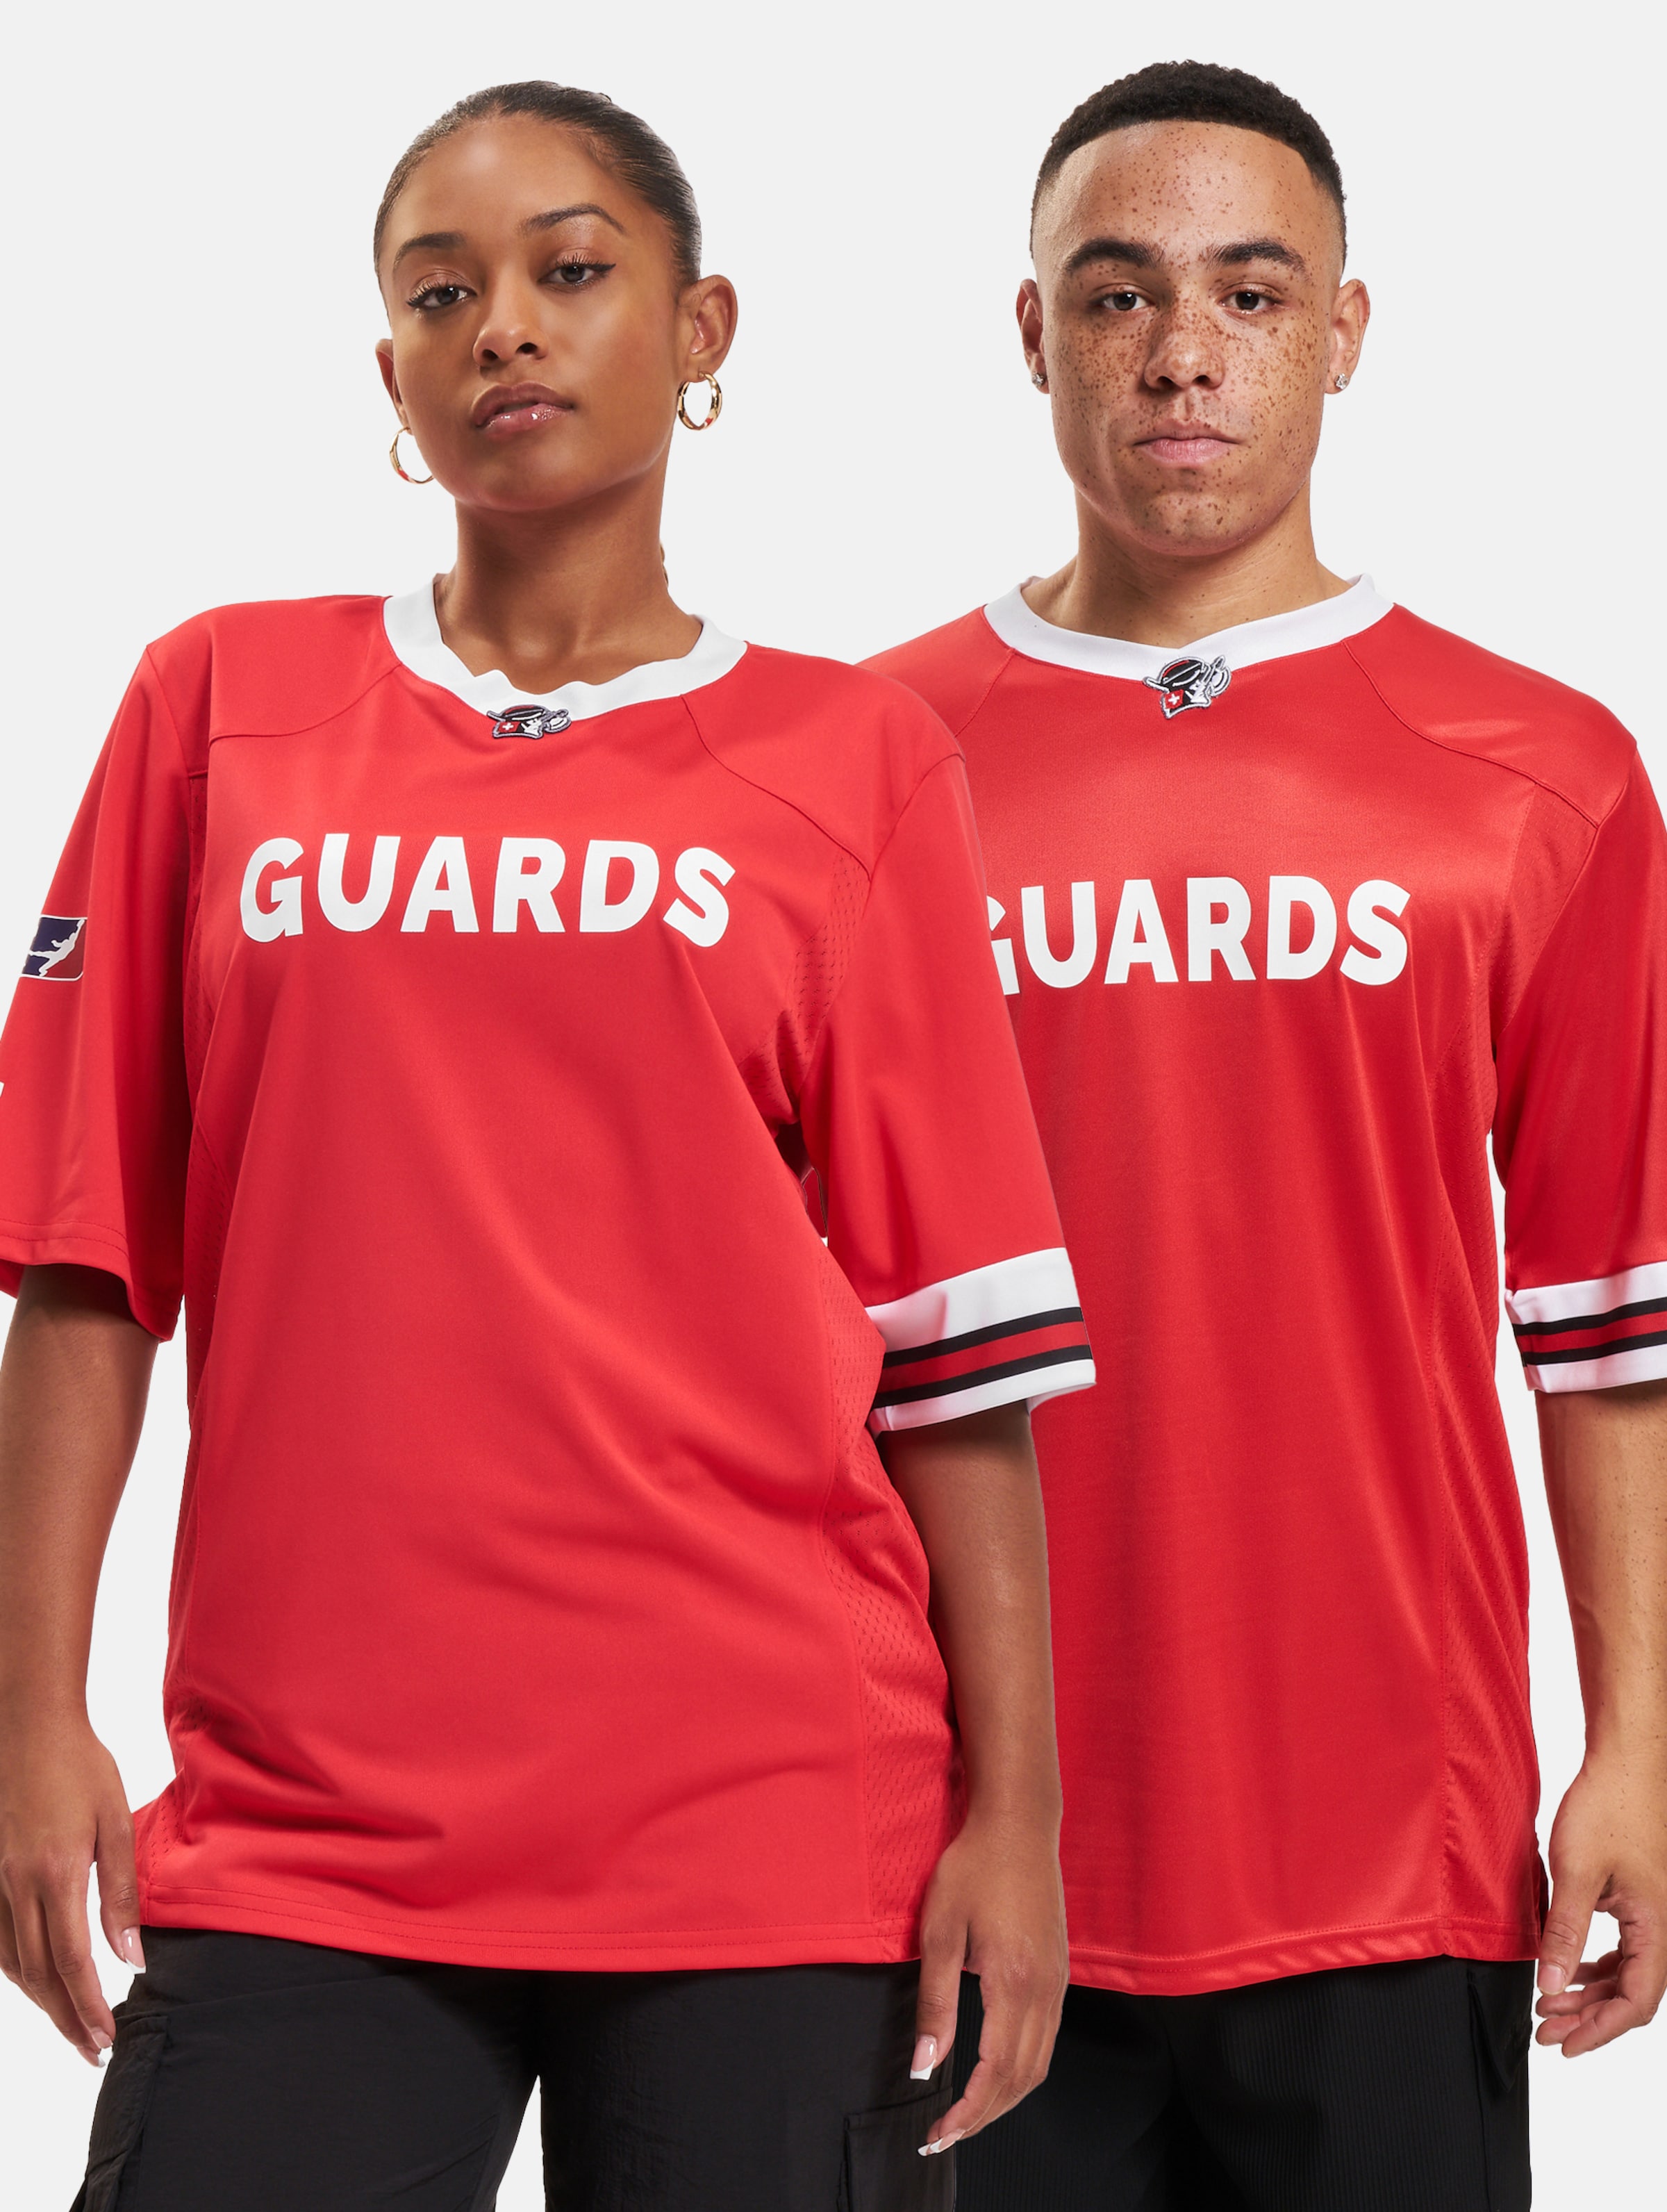 European League Of Football 1018 Helvetic Guards Authentic Game T-Shirt Vrouwen op kleur rood, Maat L